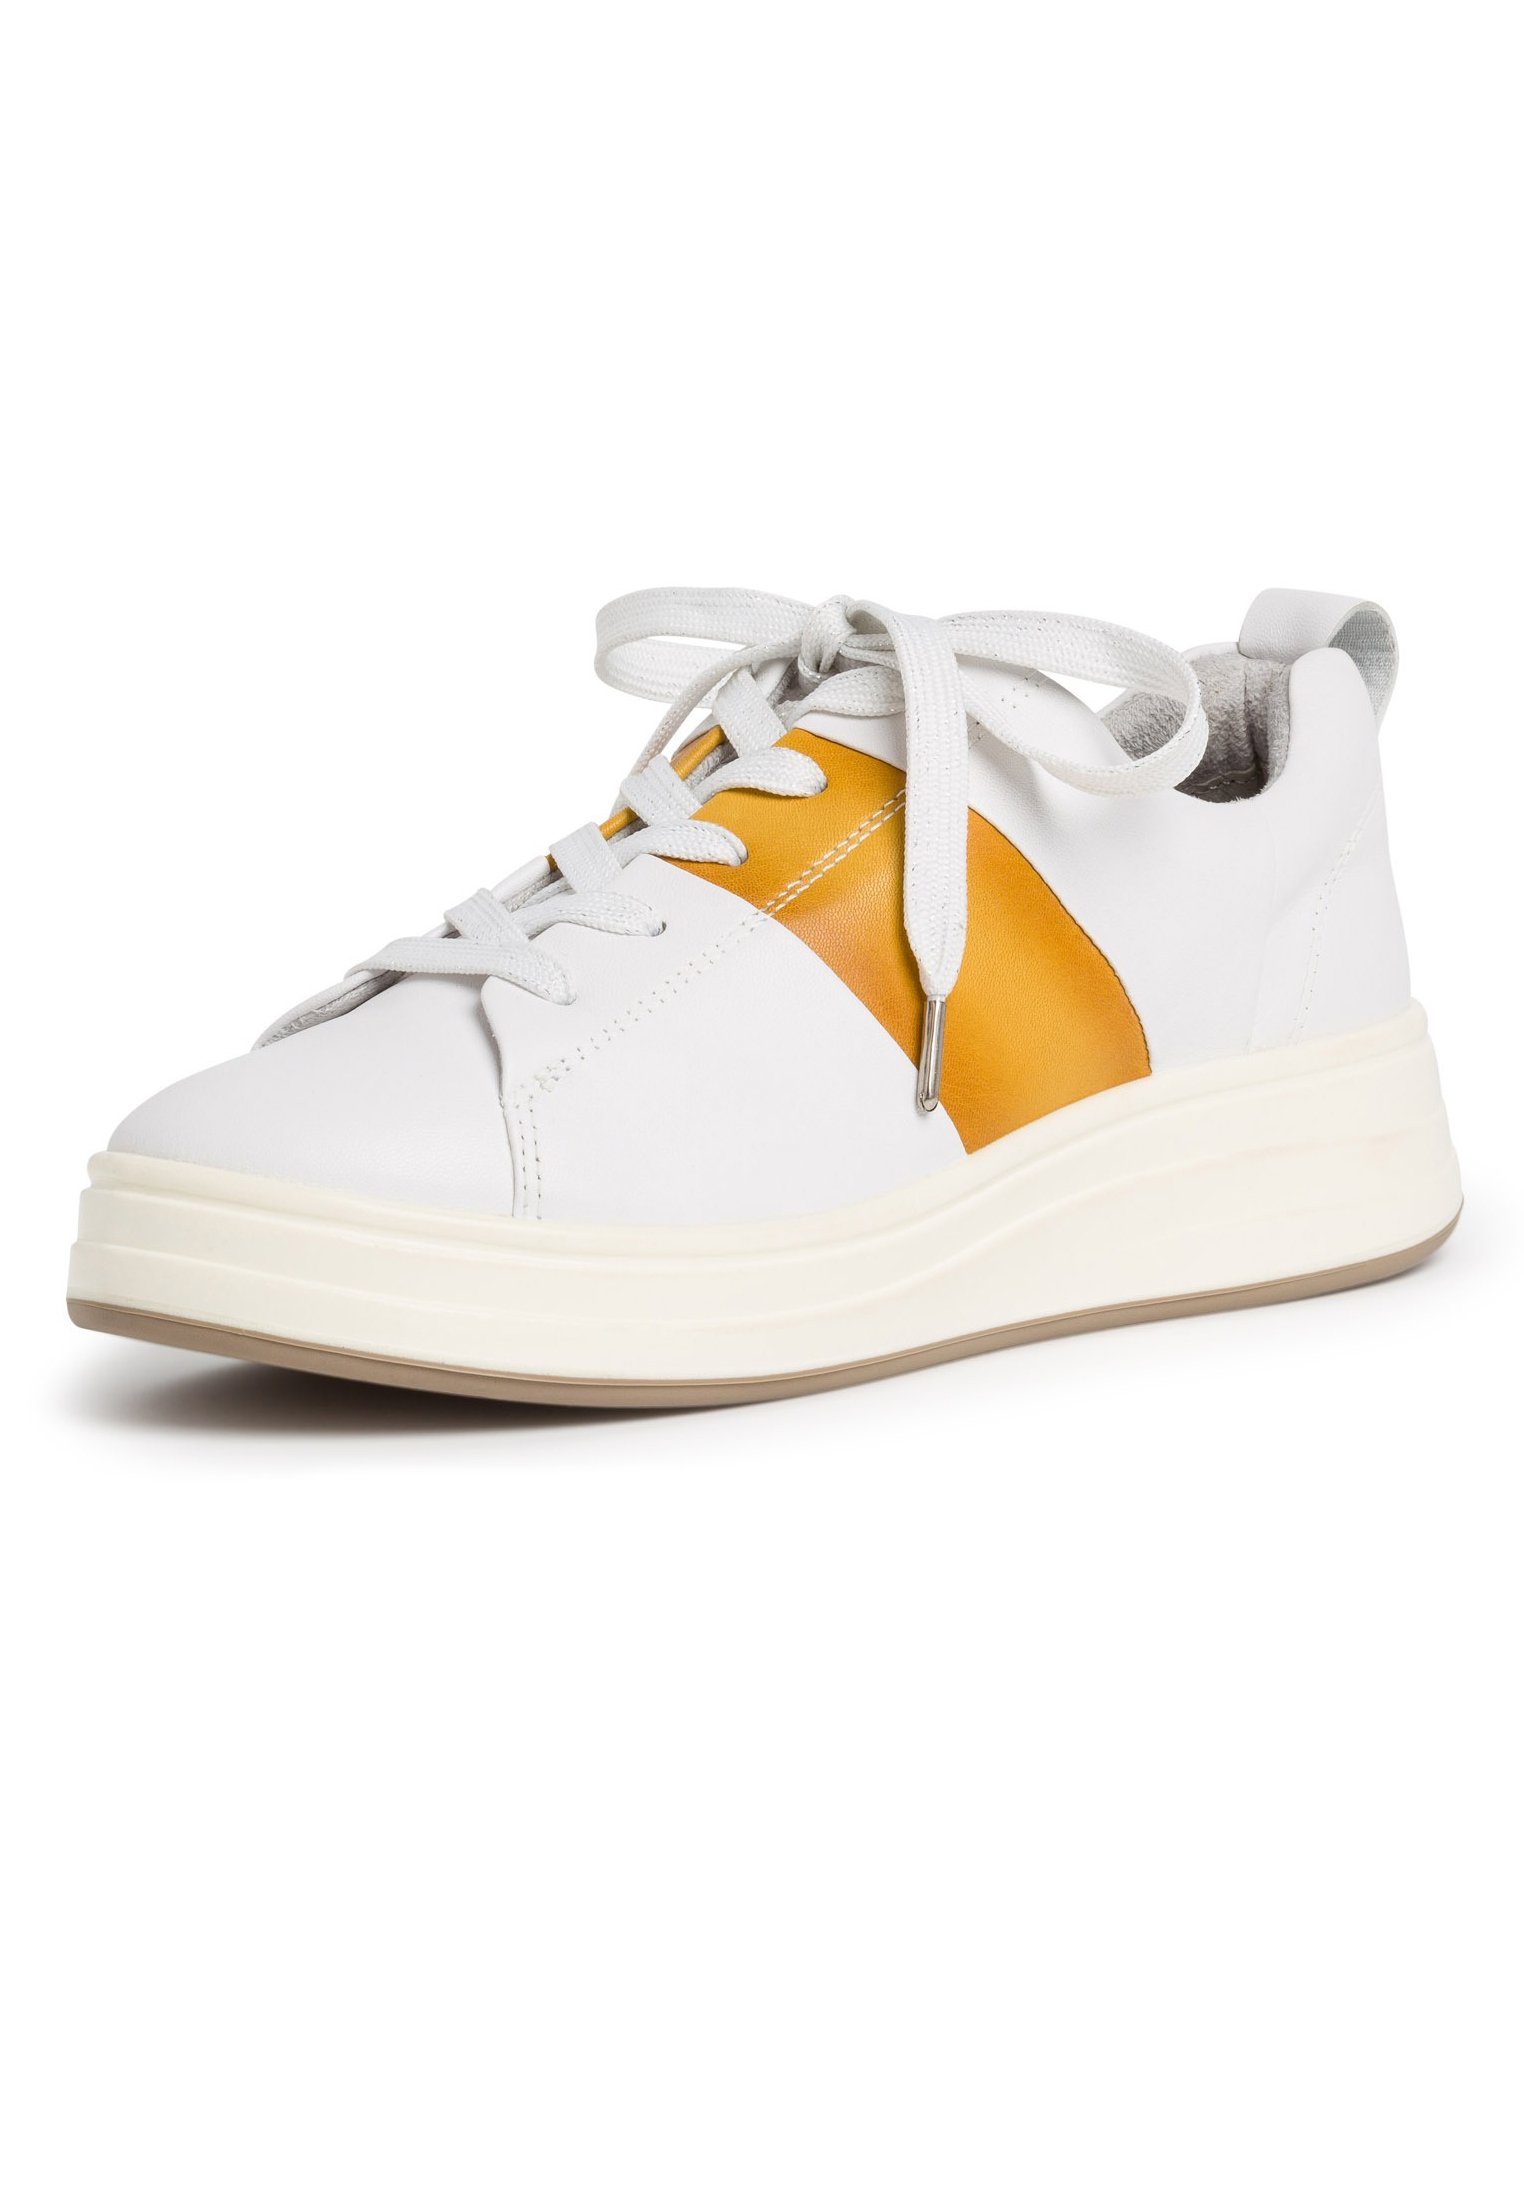 Tamaris 1-23713-24 124 White/Saffron Sneaker